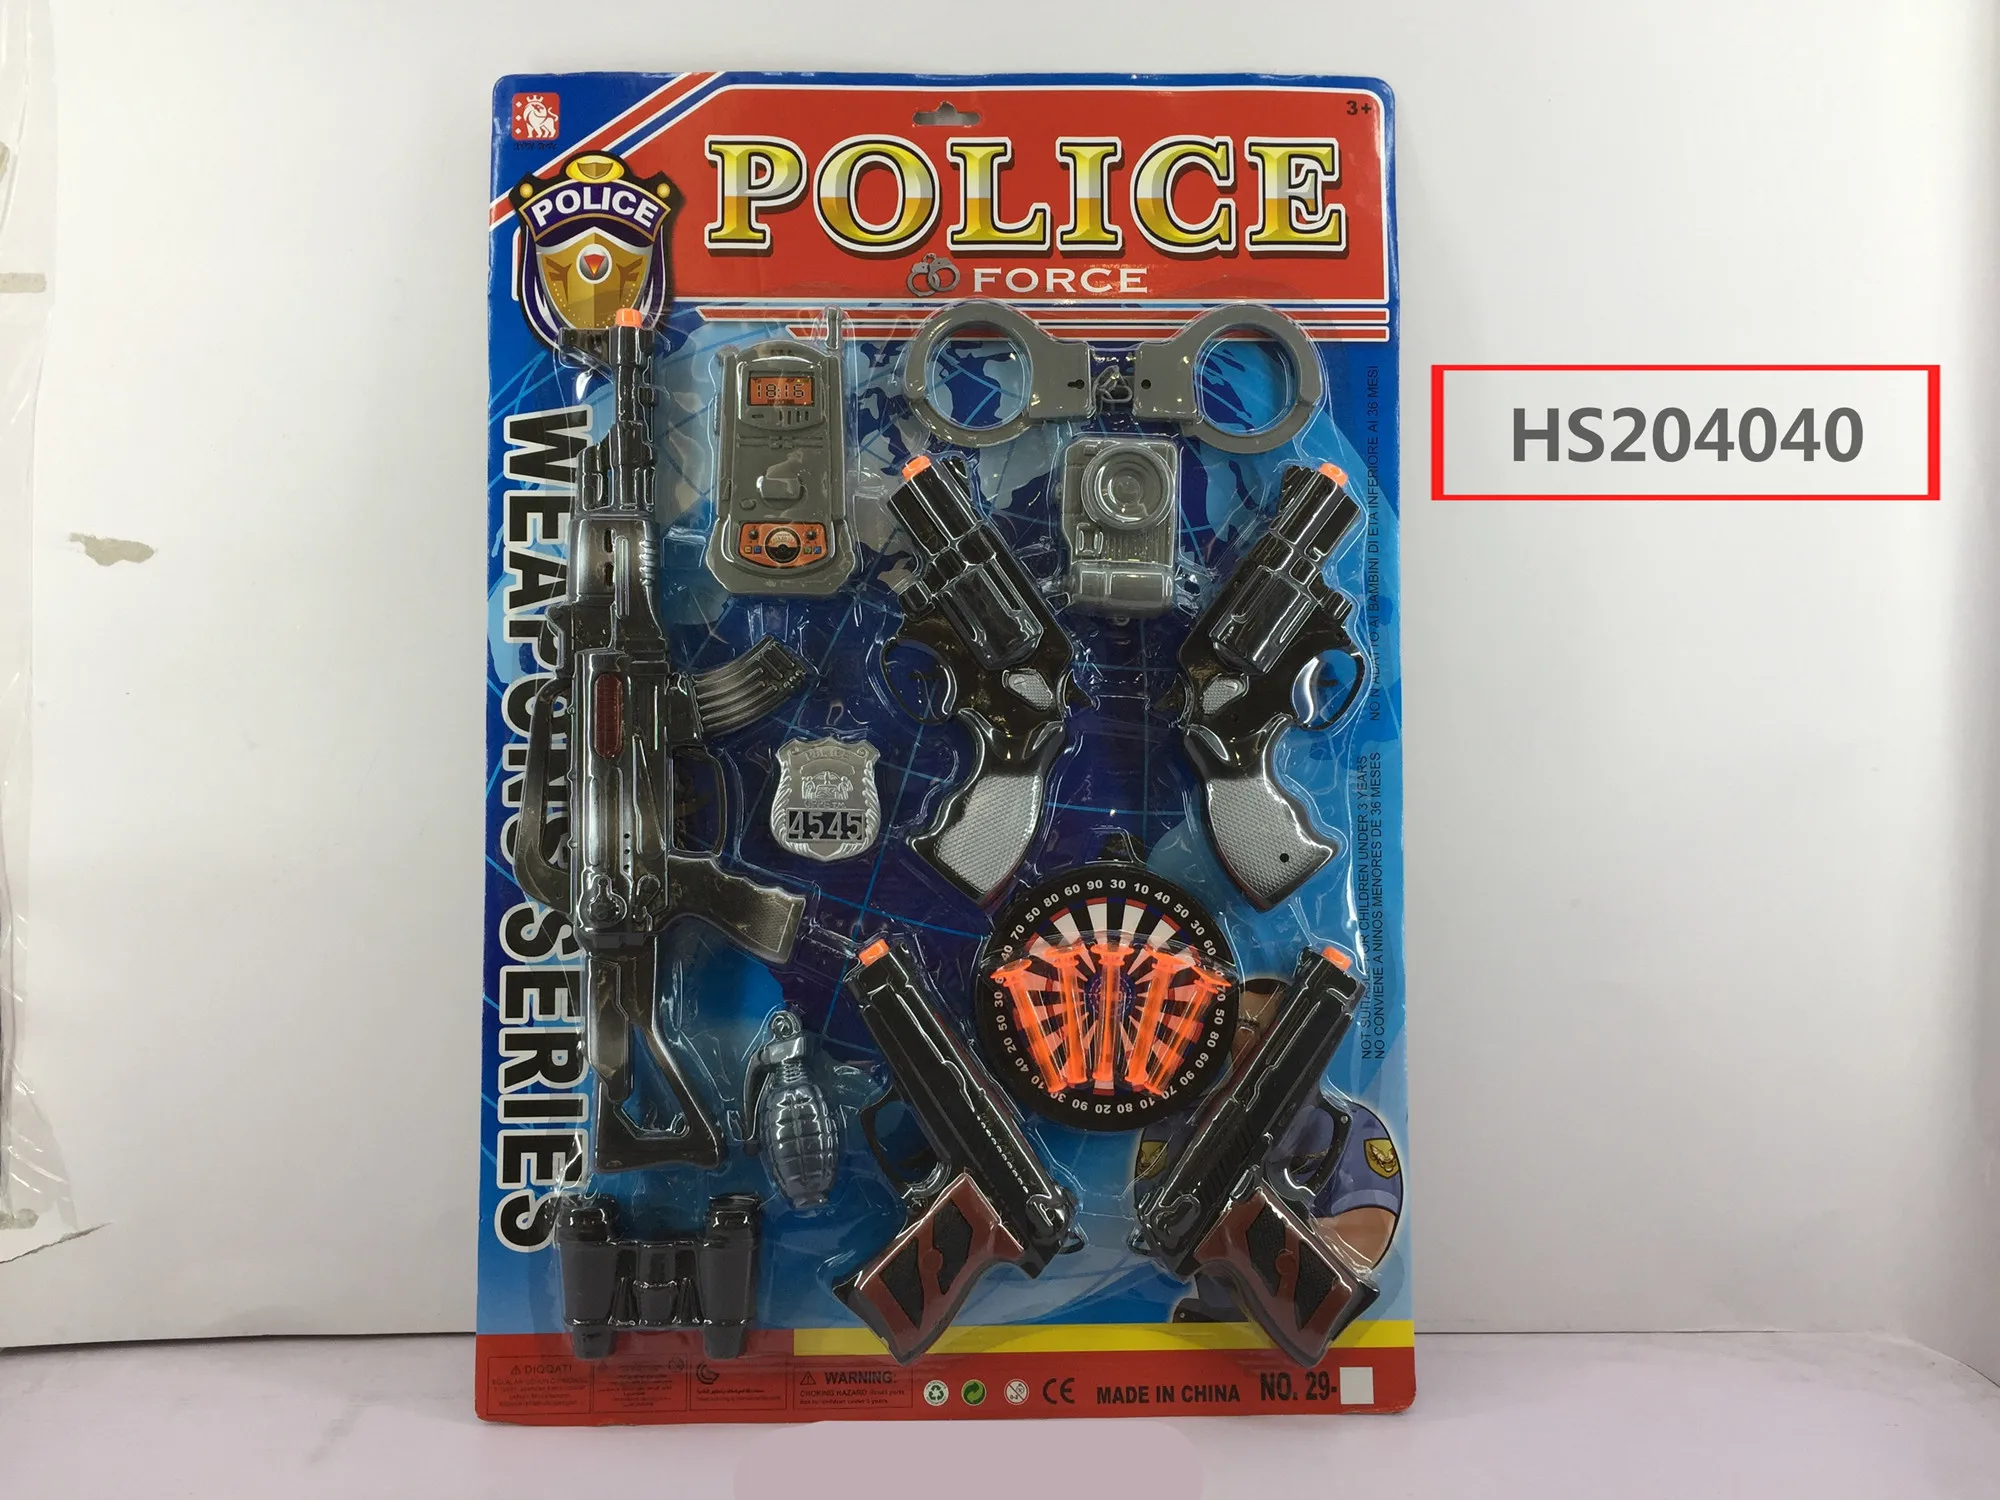 HS204040, Huwsin Toys, Police play set, toy gun set for kids